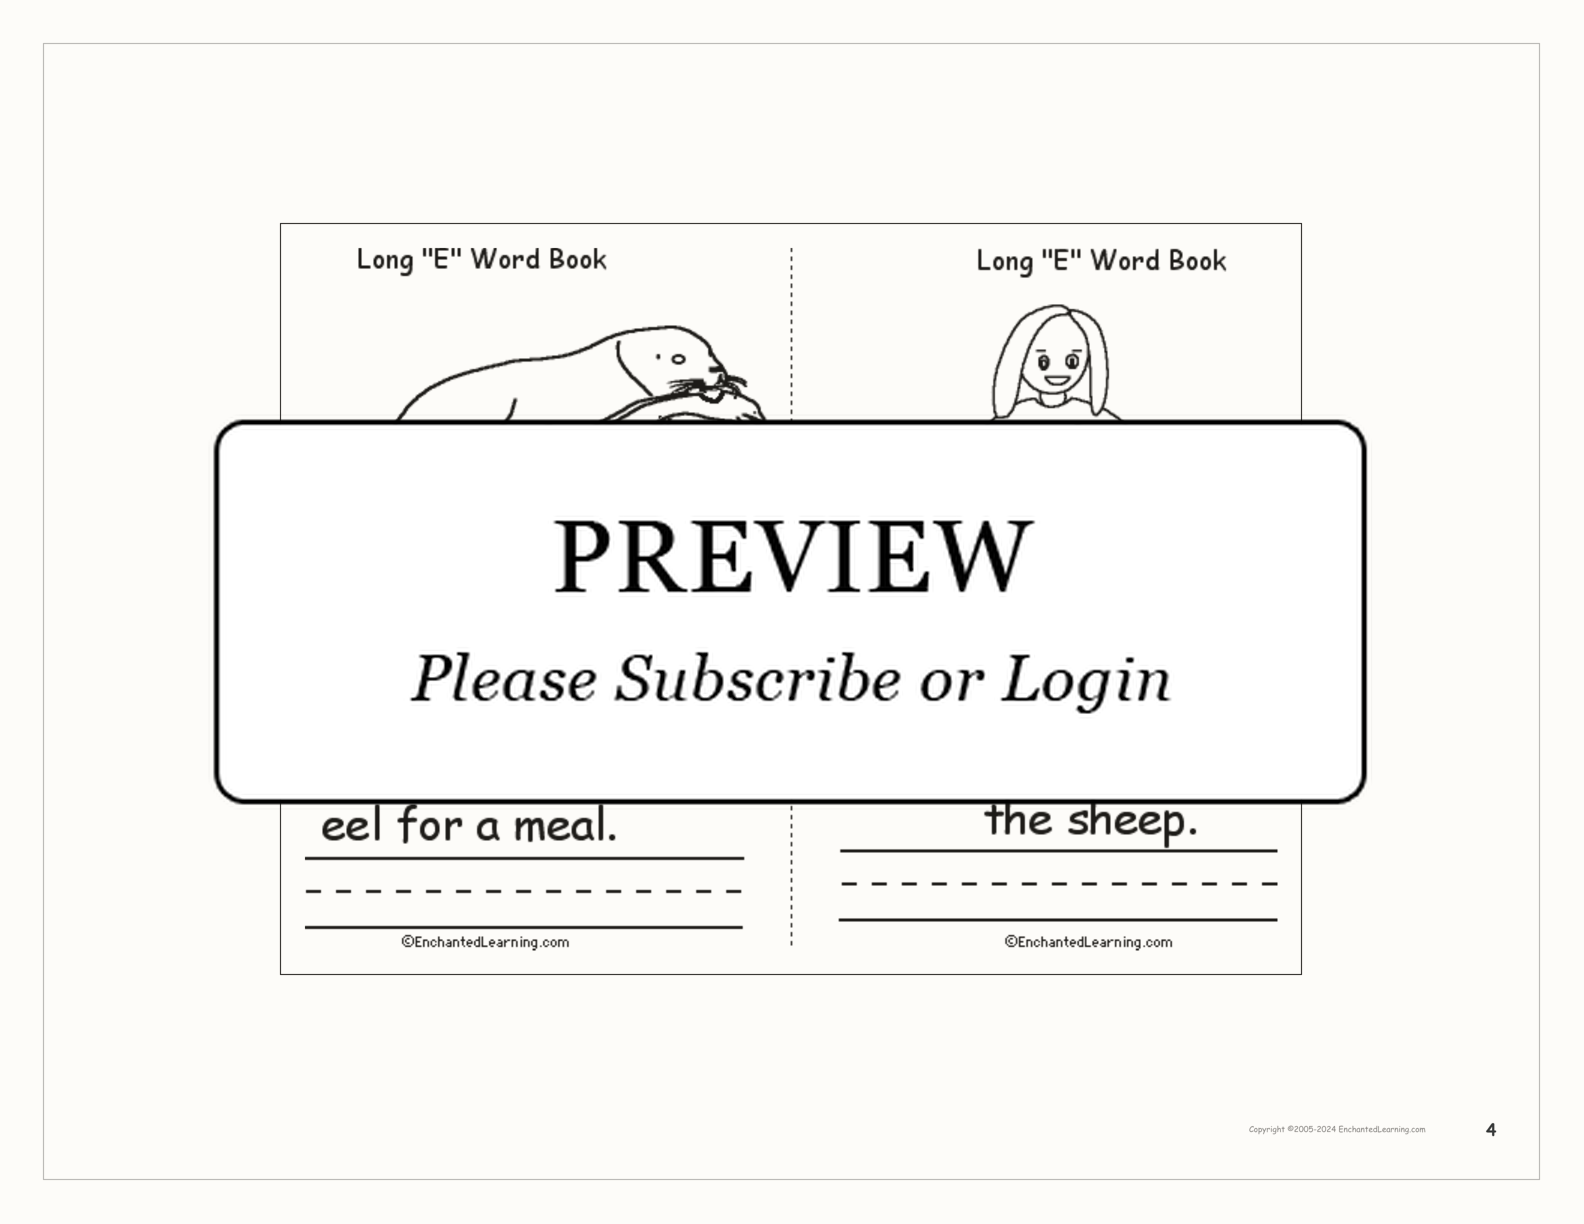 Long 'E' Words Book interactive printout page 4